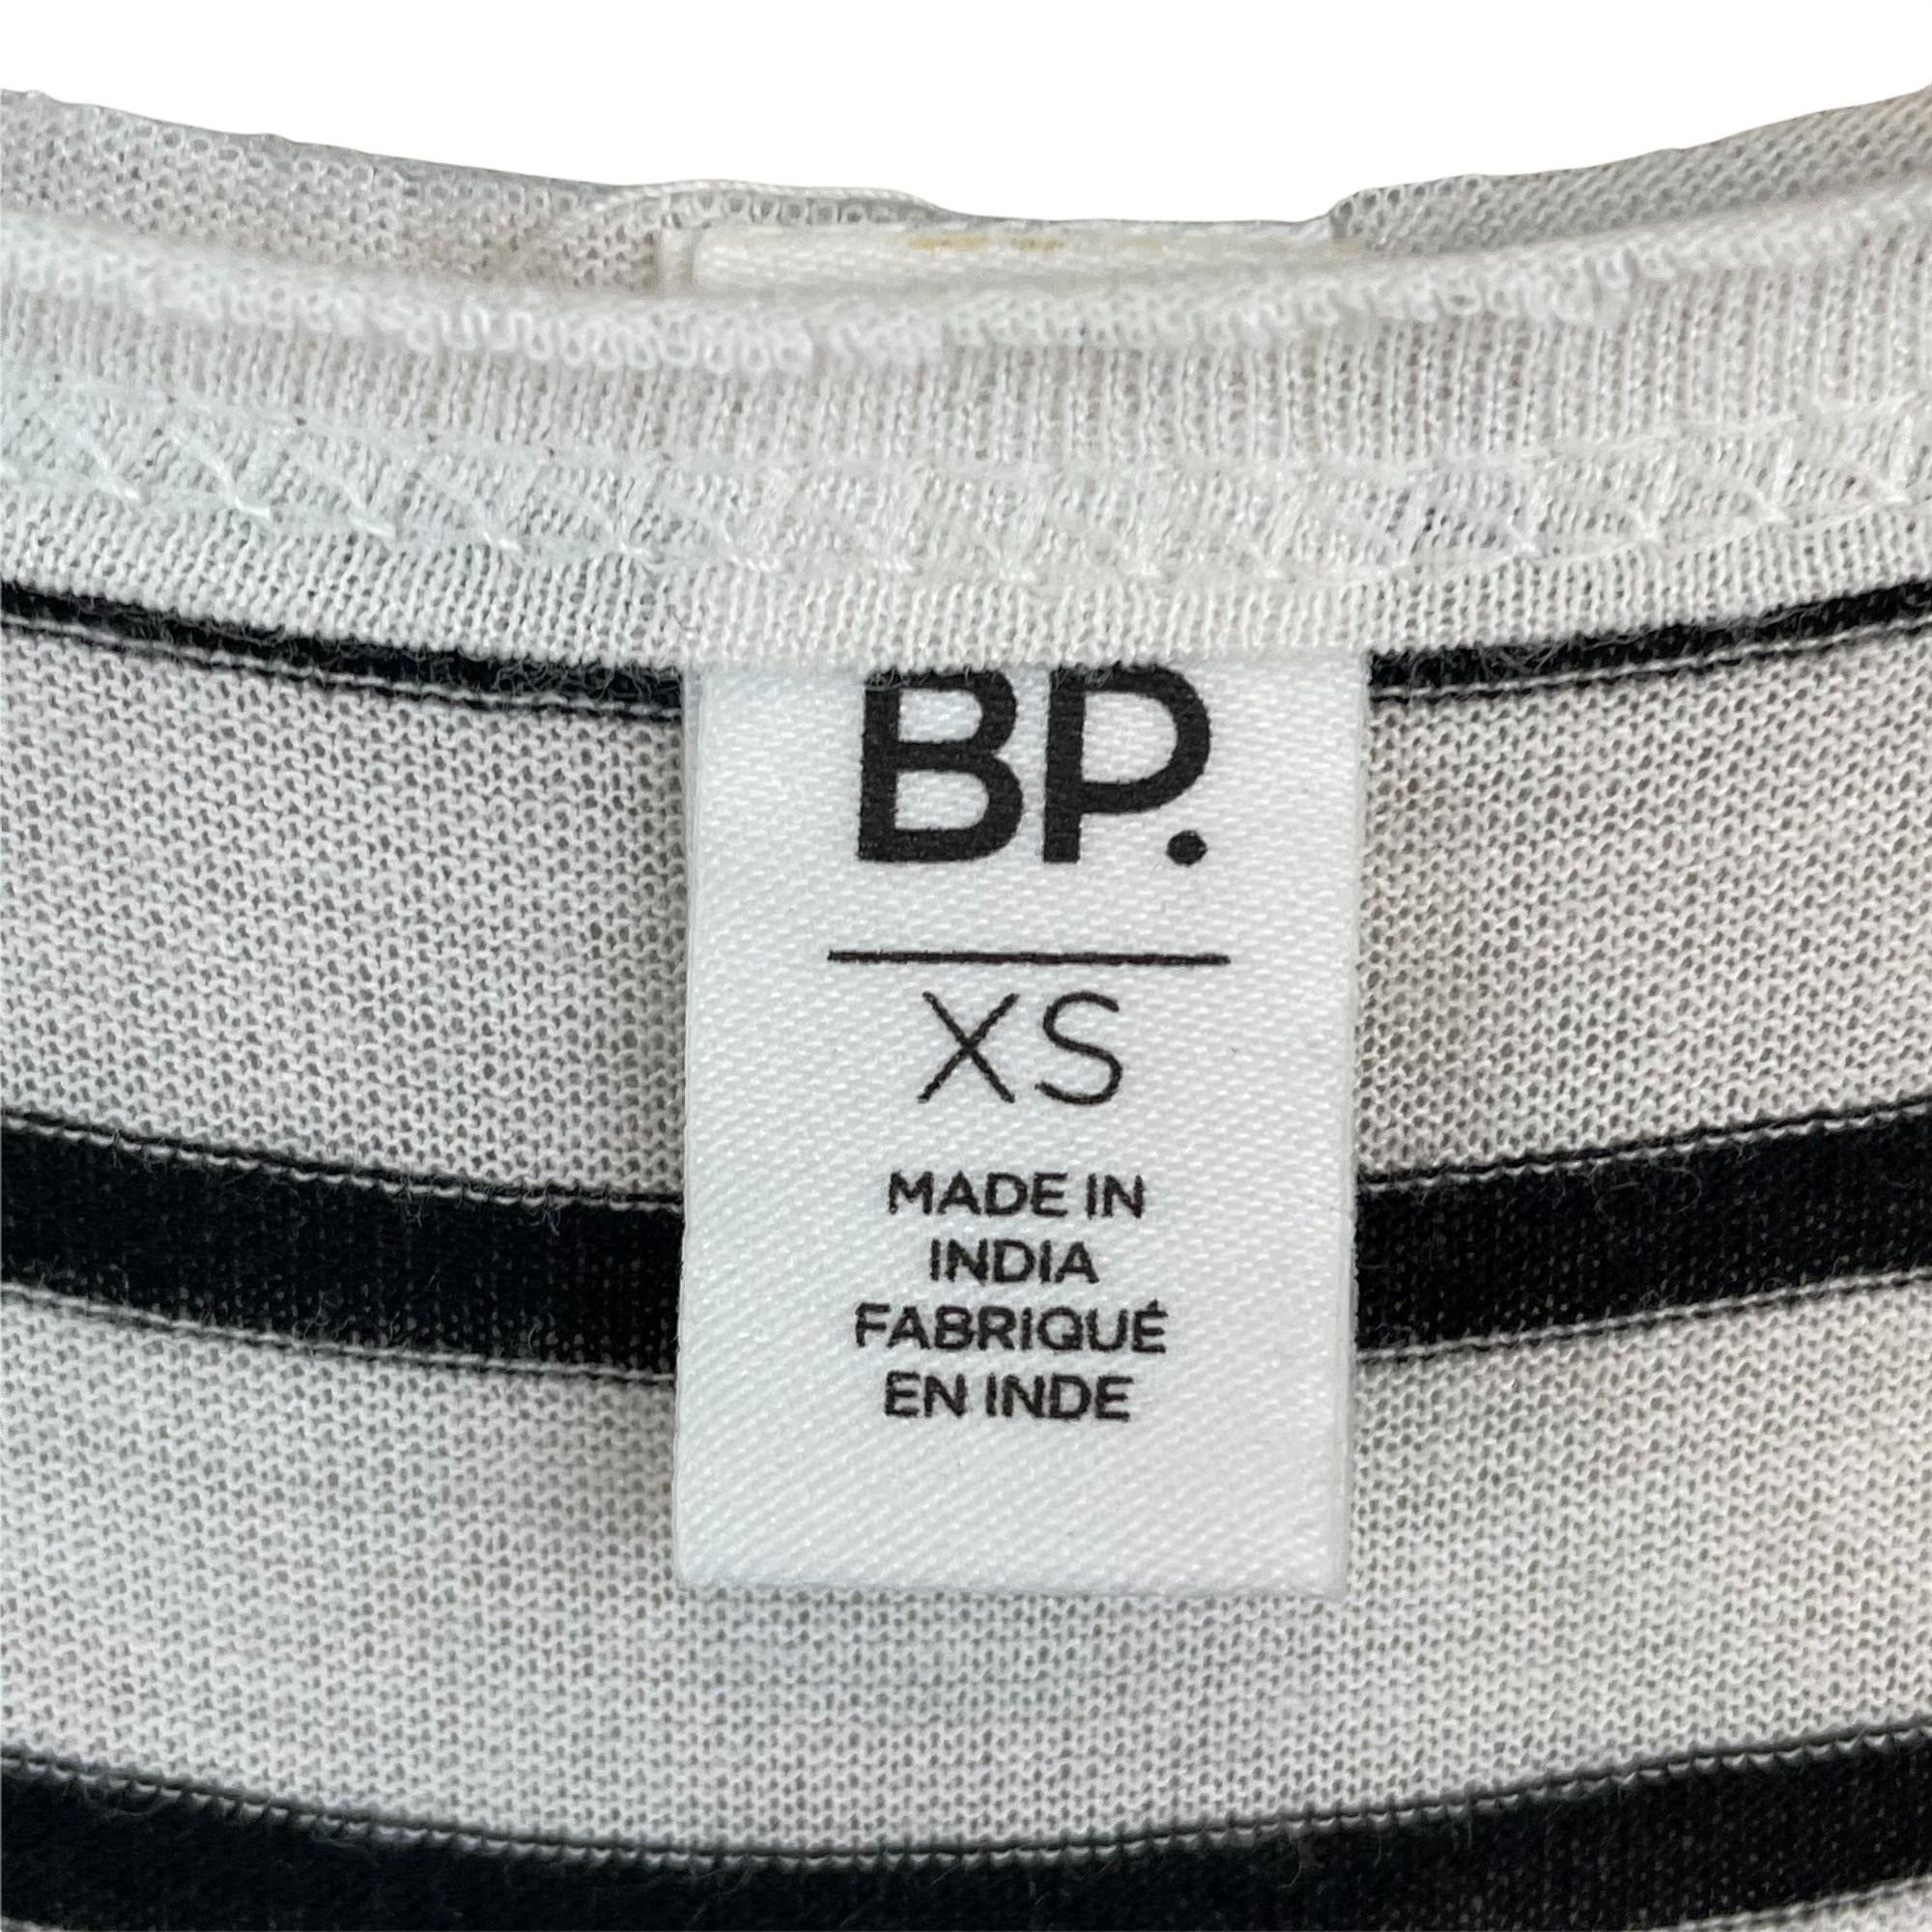 BP bp white ivory black striped raw edge v-neck tee extra small Size XS / US 0-2 / IT 36-38 - 10 Thumbnail